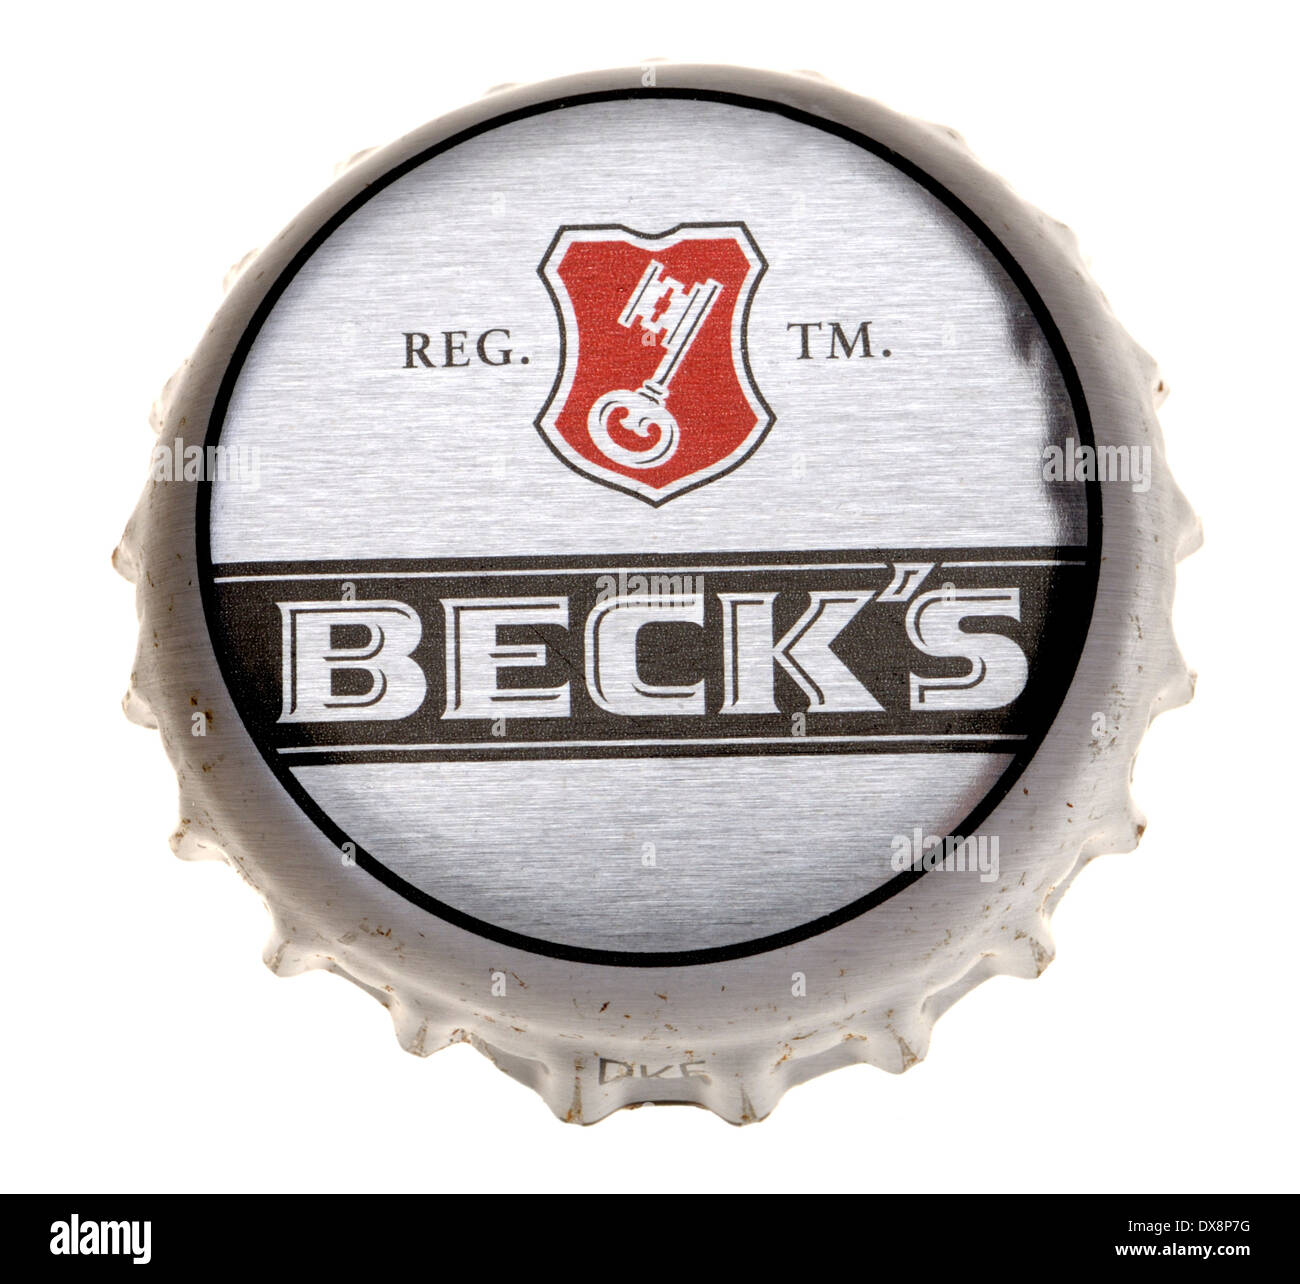 Beer bottle cap - Beck's (Germany) Stock Photo